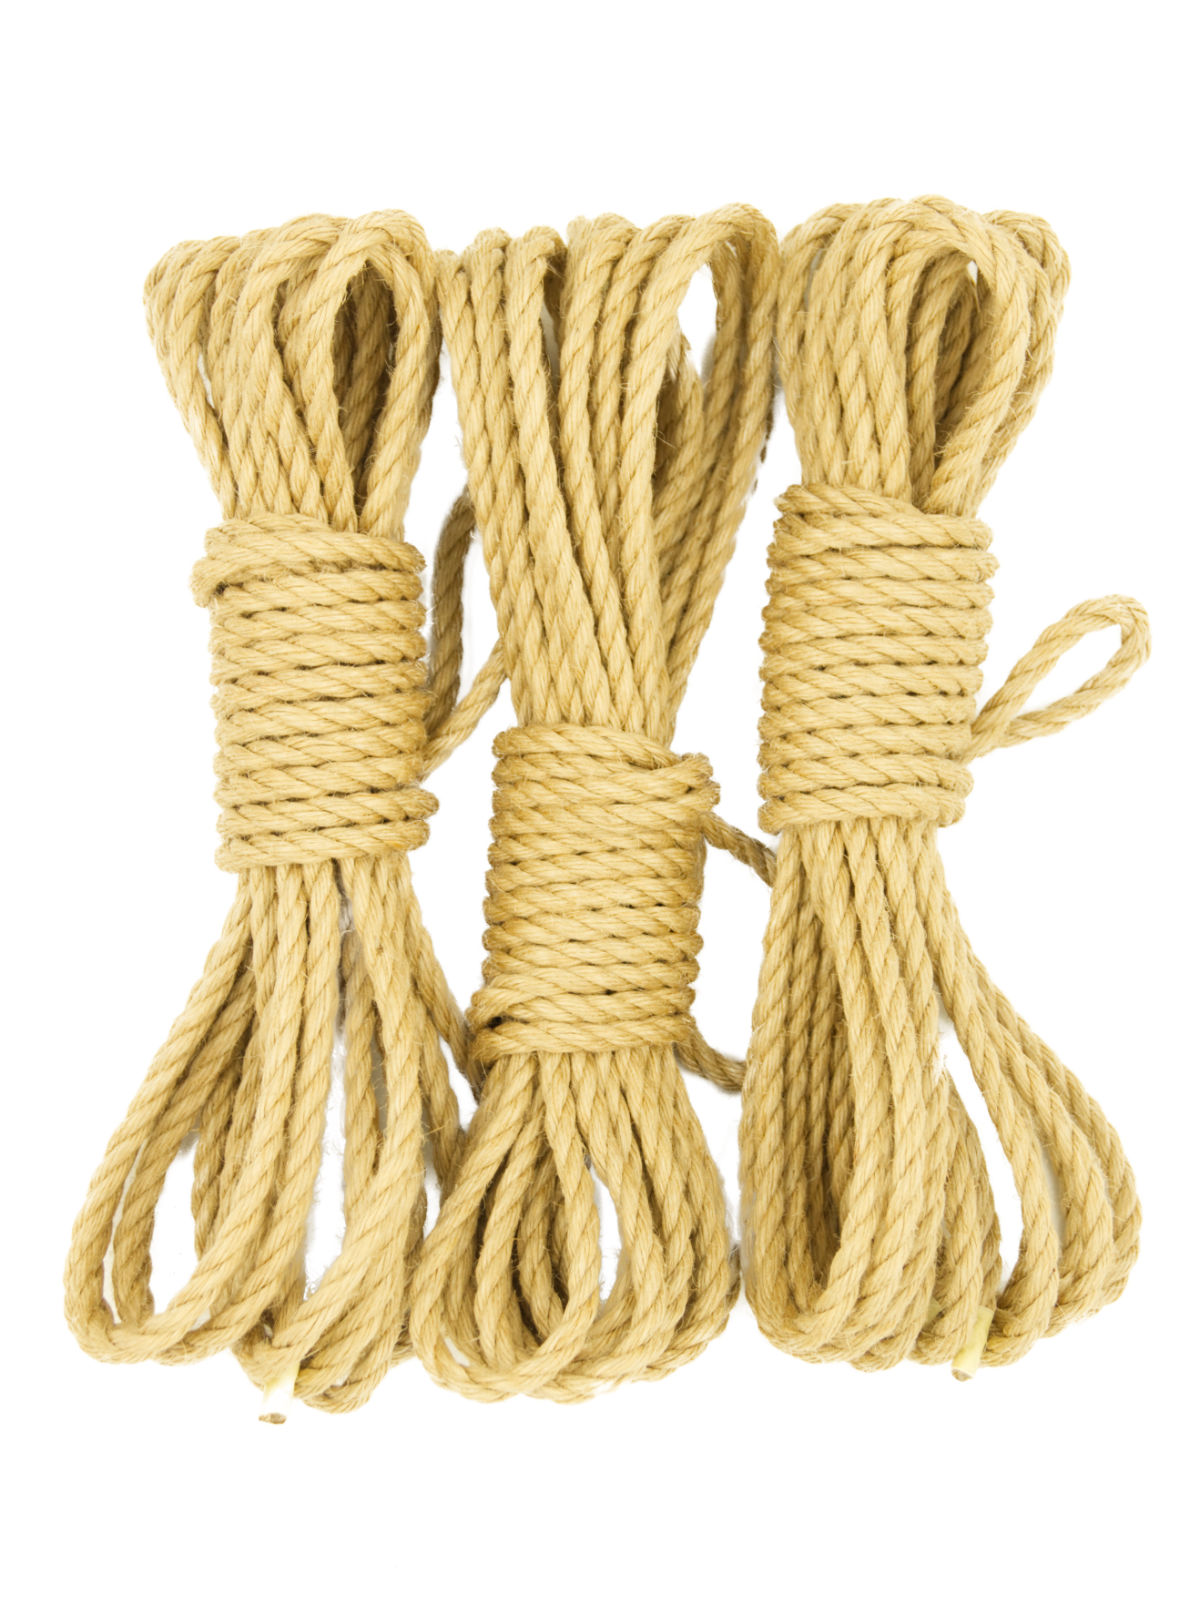 ø 5.5mm RAW Jouyoku jute rope for Shibari, Kinbaku bondage, various lengths